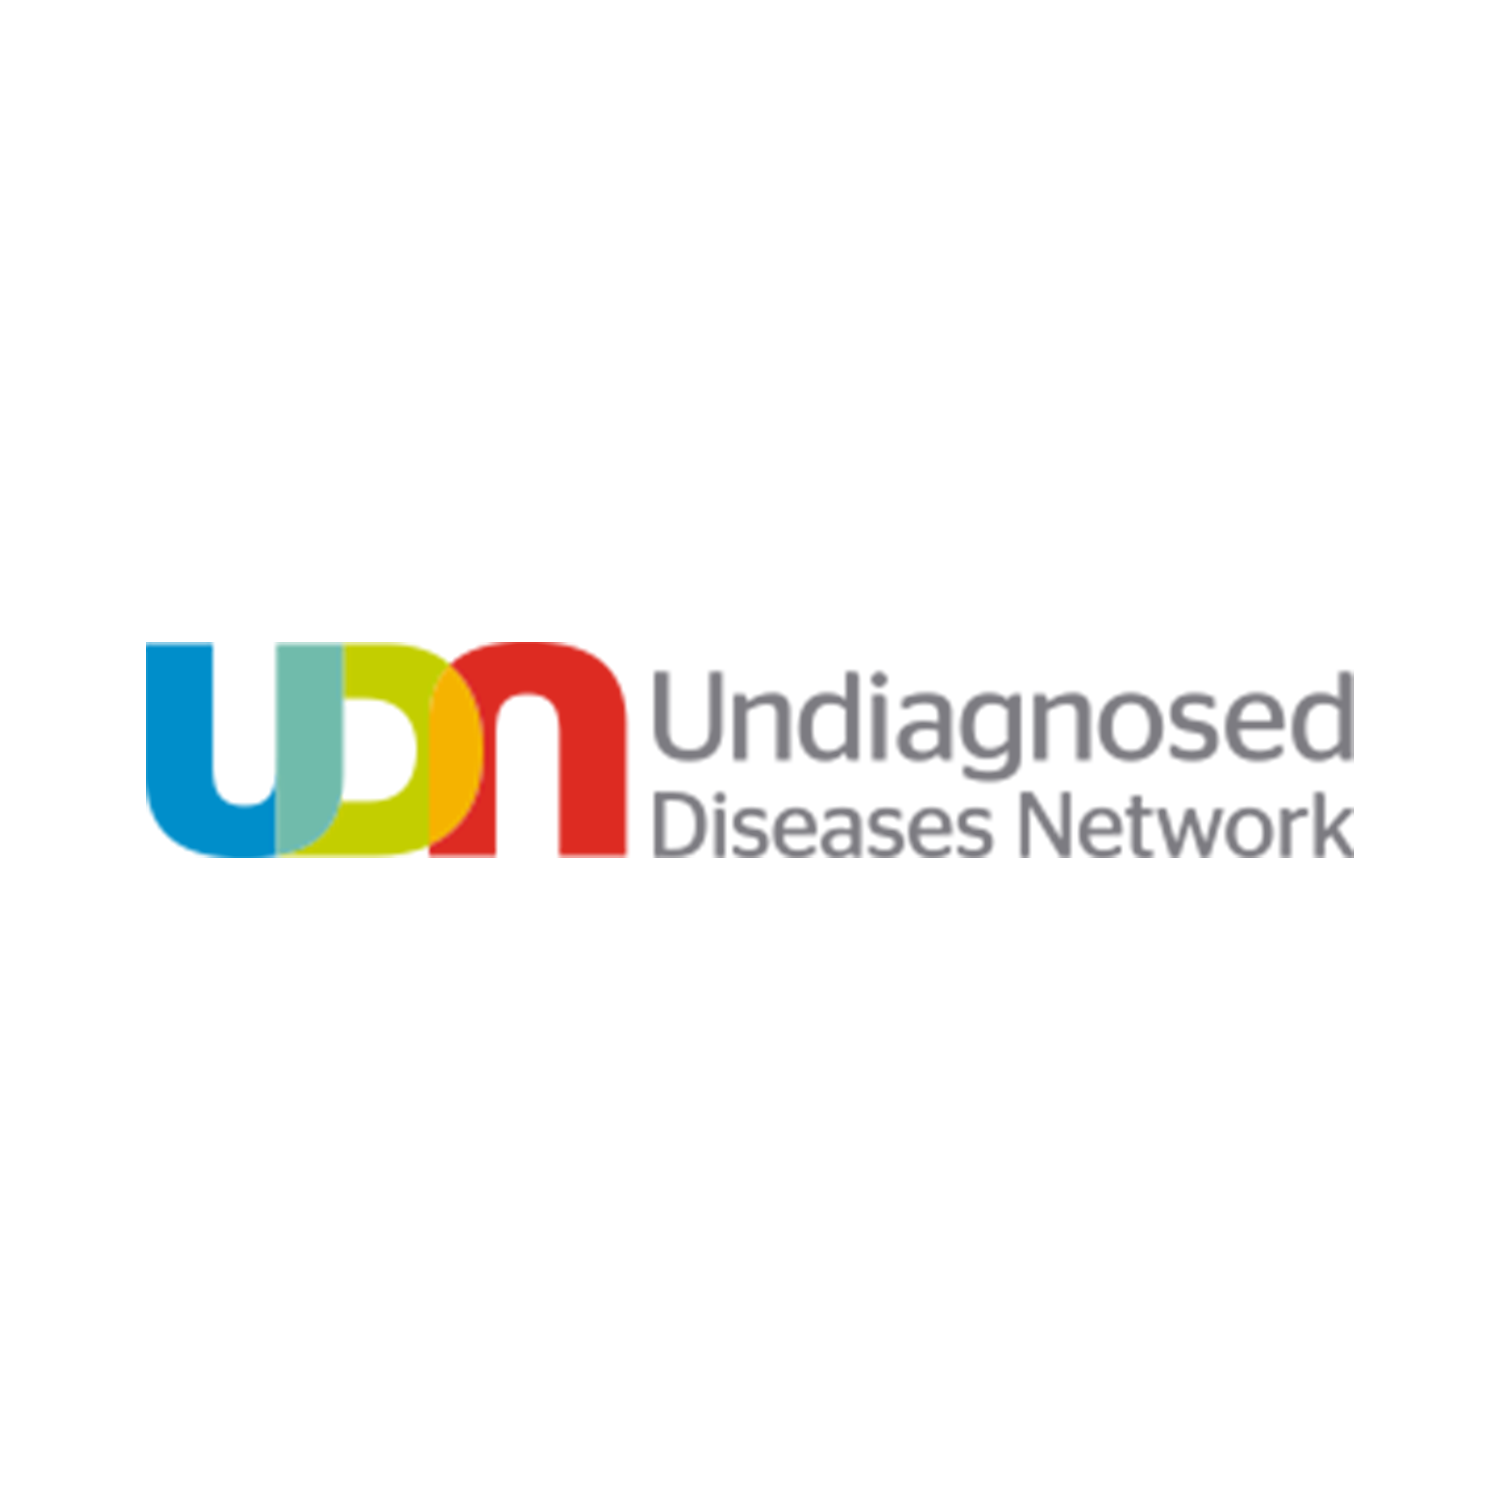 Undiagnosed diseases network